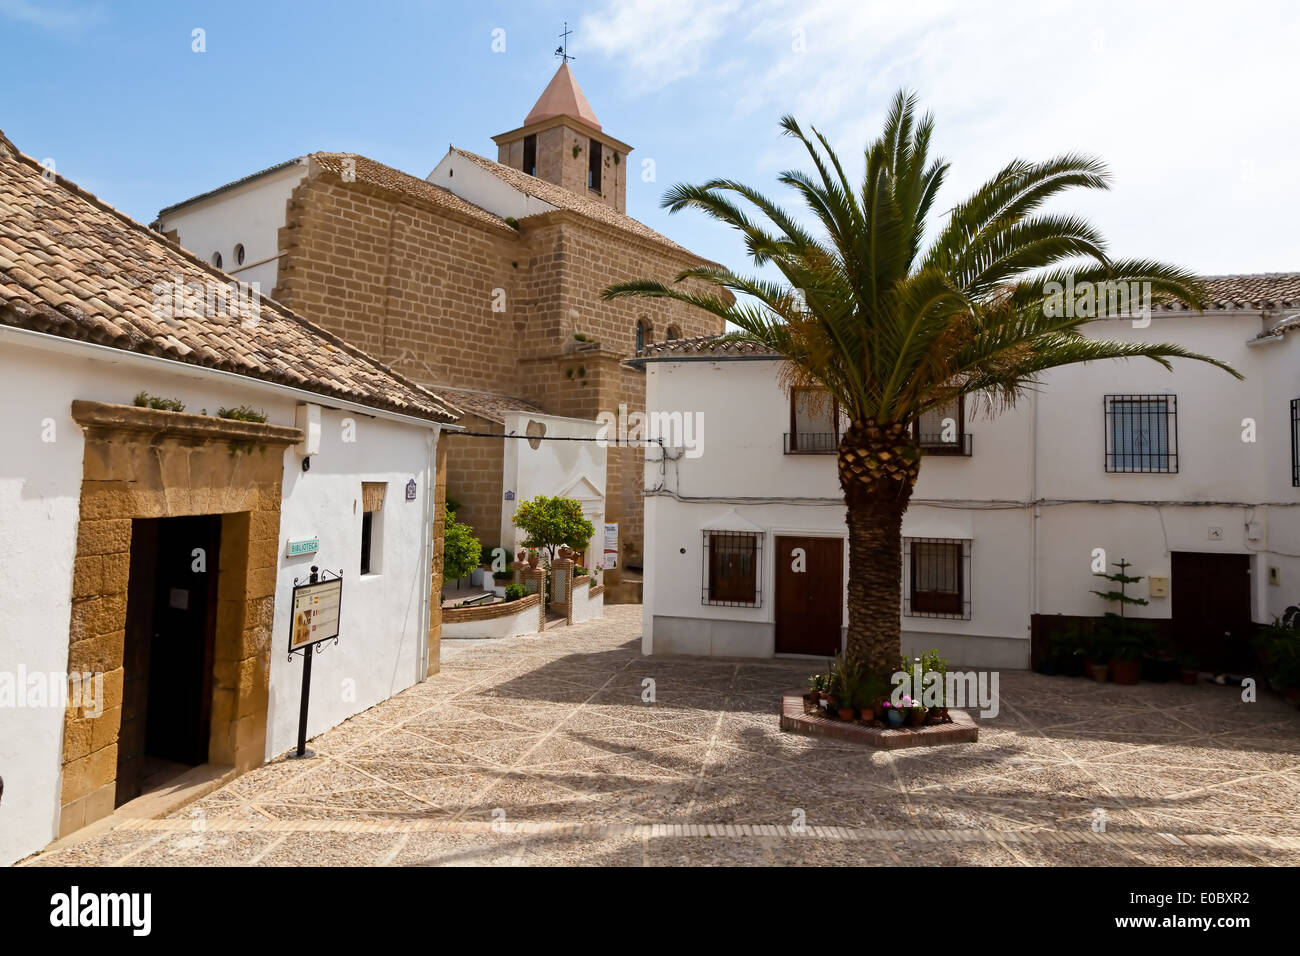 The small village Iznajar in Andalusia, Spain, Das kleine Dorf Iznajar in Andalusien, Spanien Stock Photo